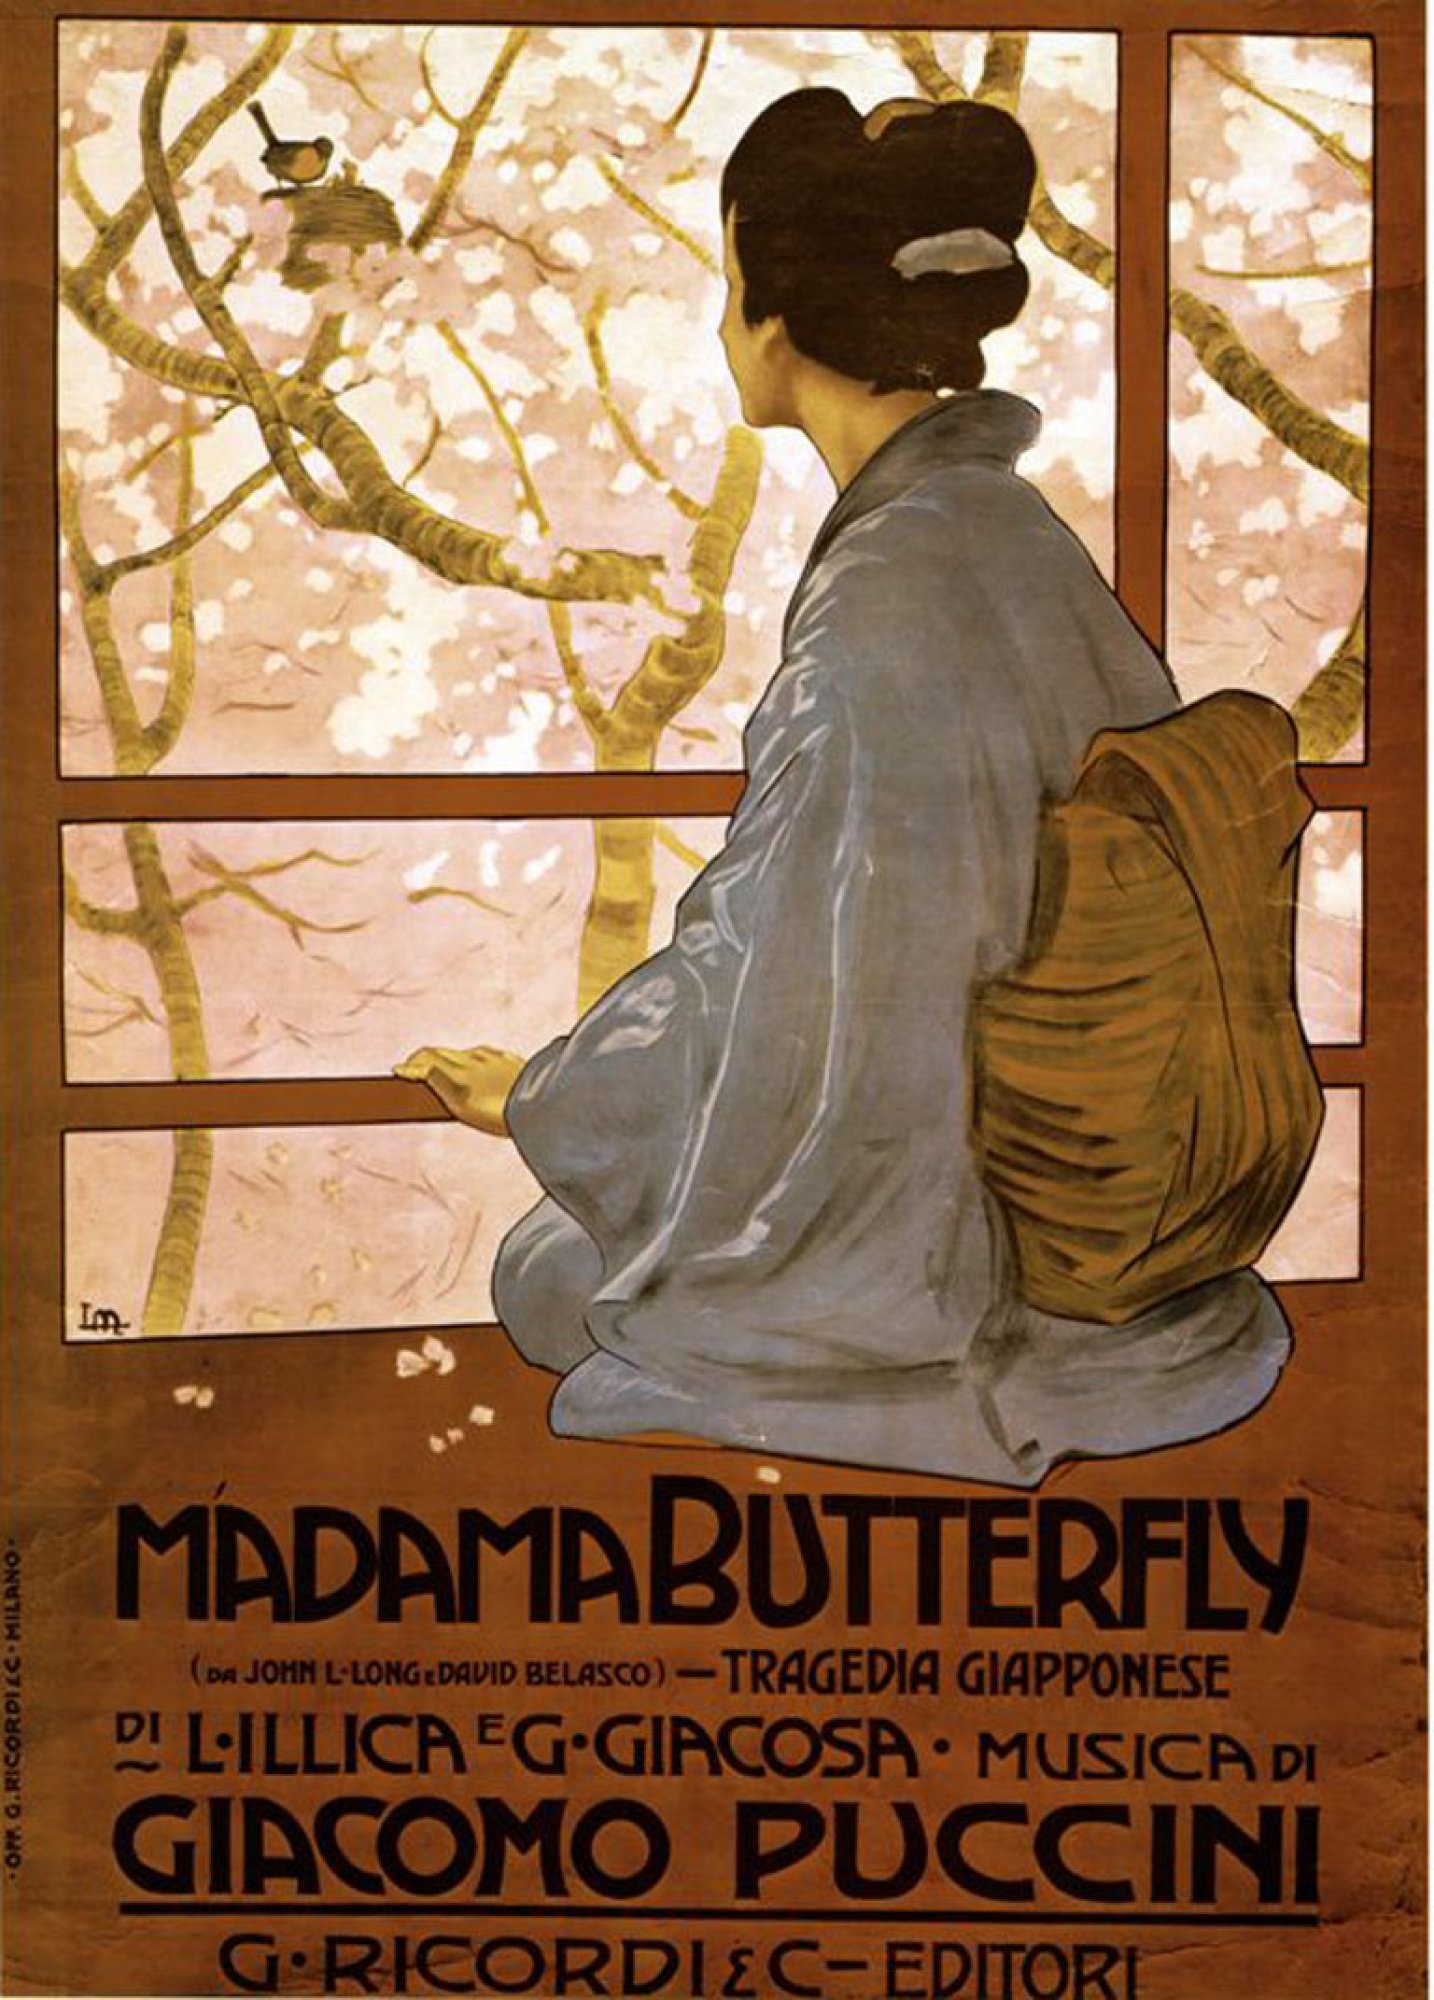 Madama Butterly by Giacomo Puccini - Versilia.org